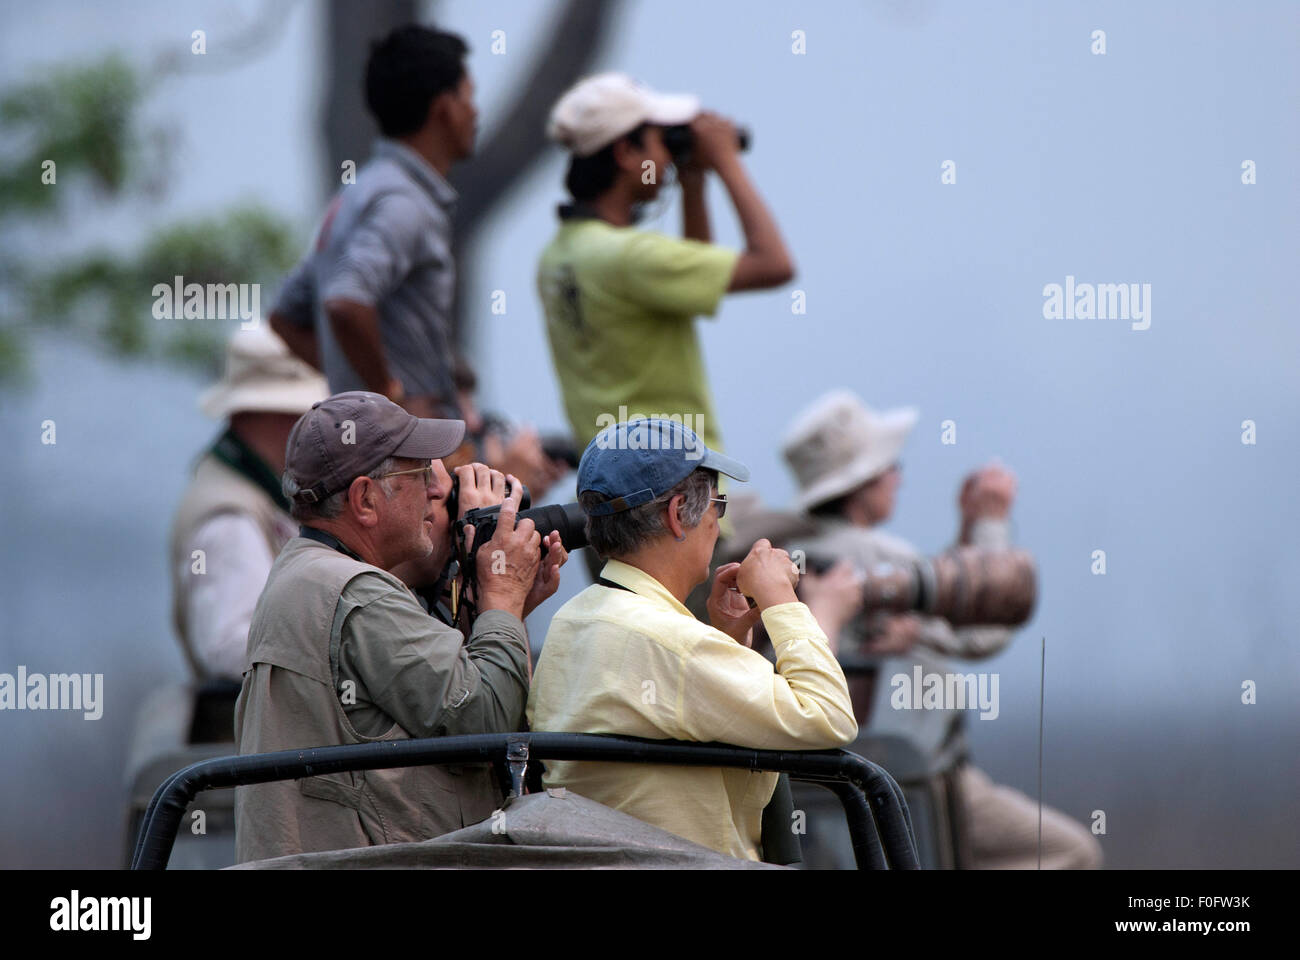 The image was shot in Kaziranga National park in India Stock Photo